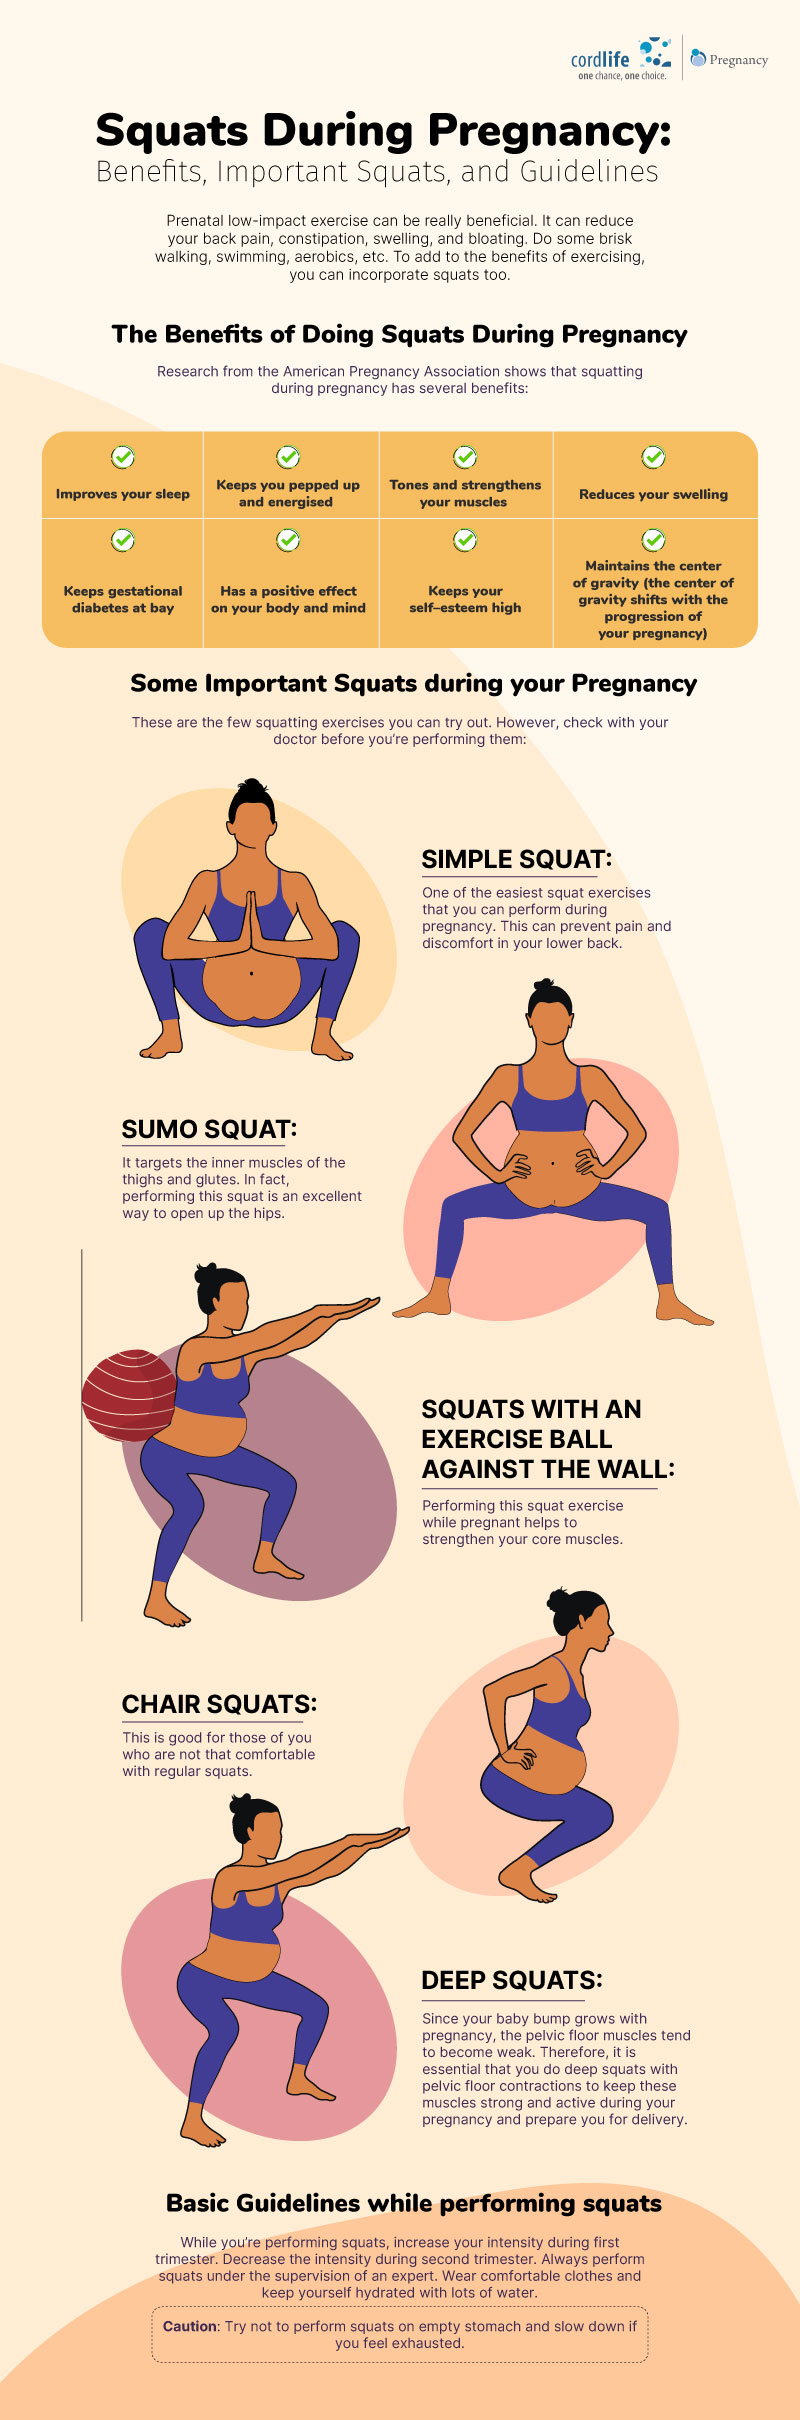 Squats During Pregnancy: Benefits, Important Squats, and